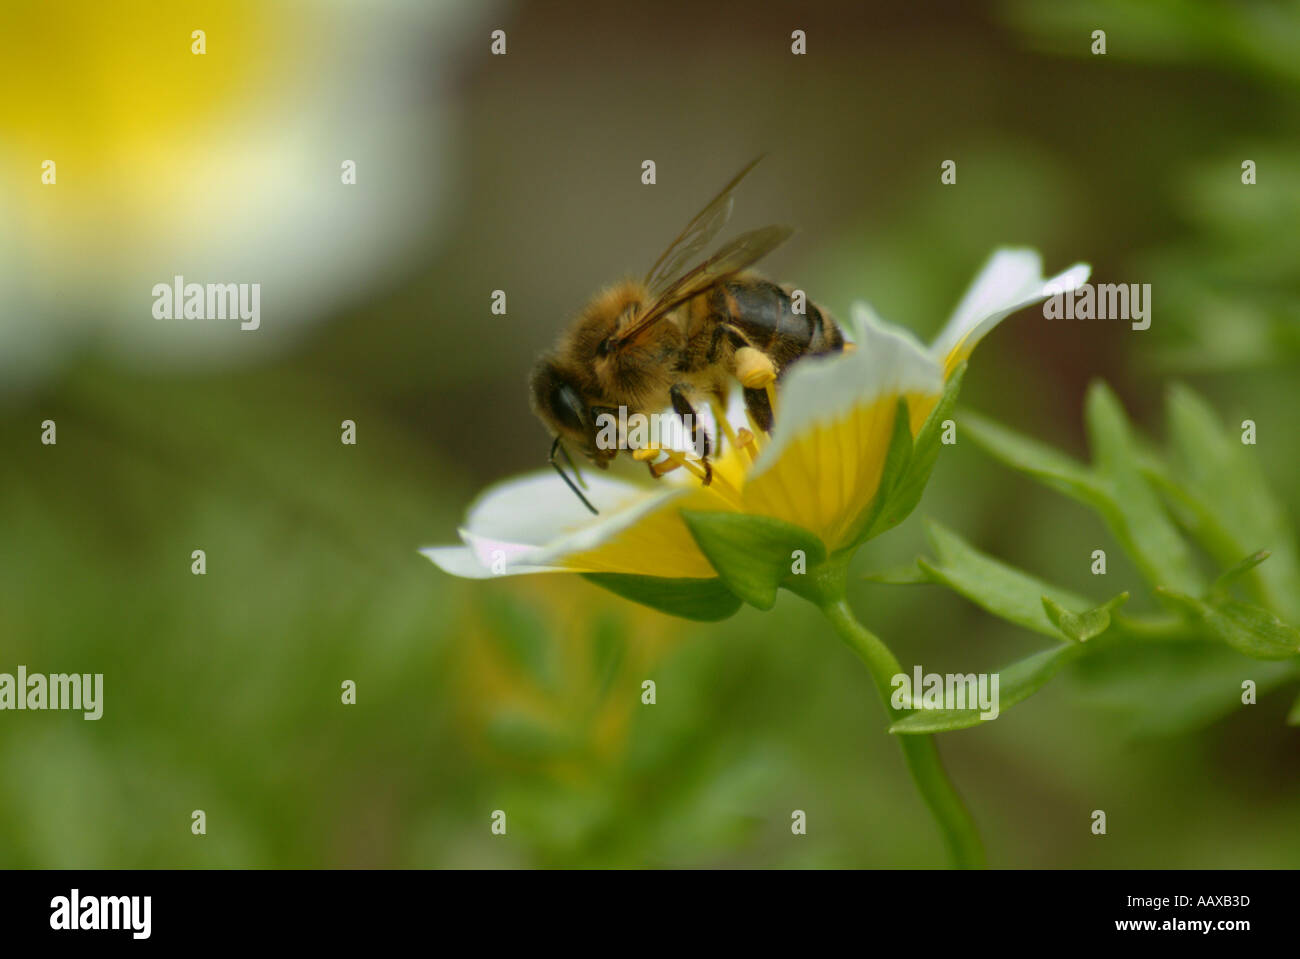 Bee on flower gathering nectar Stock Photo